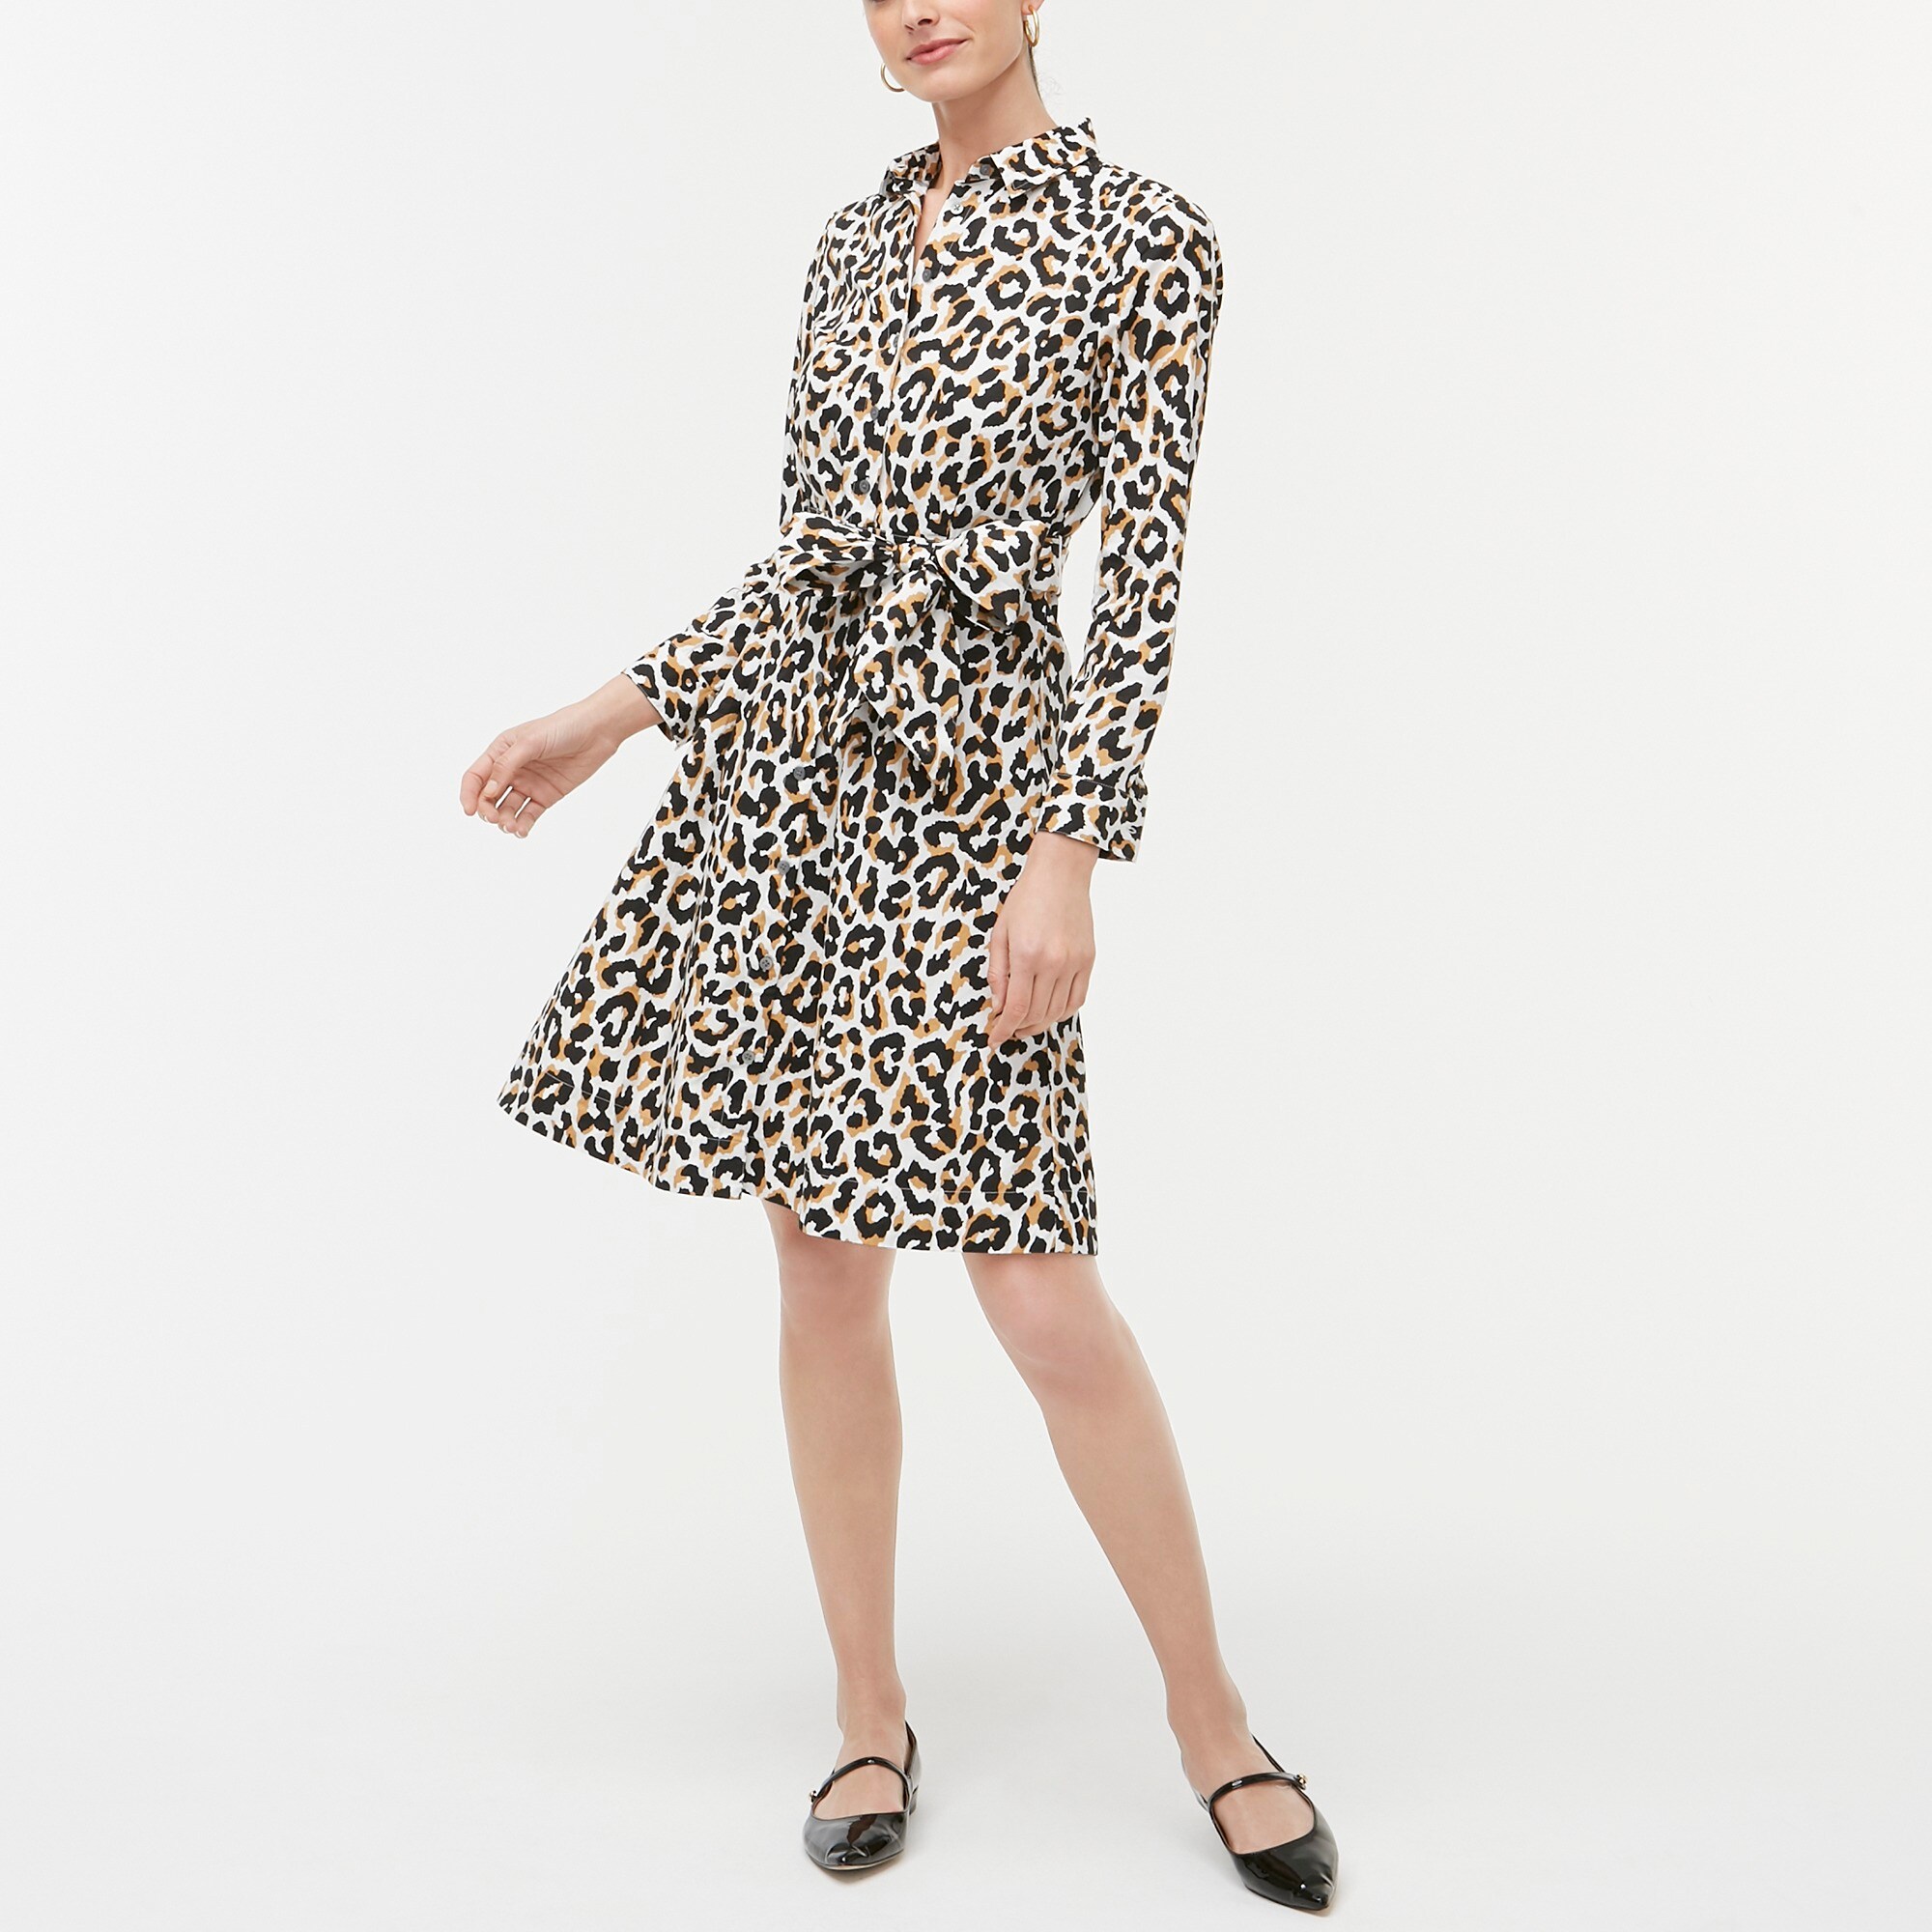 j crew factory leopard dress